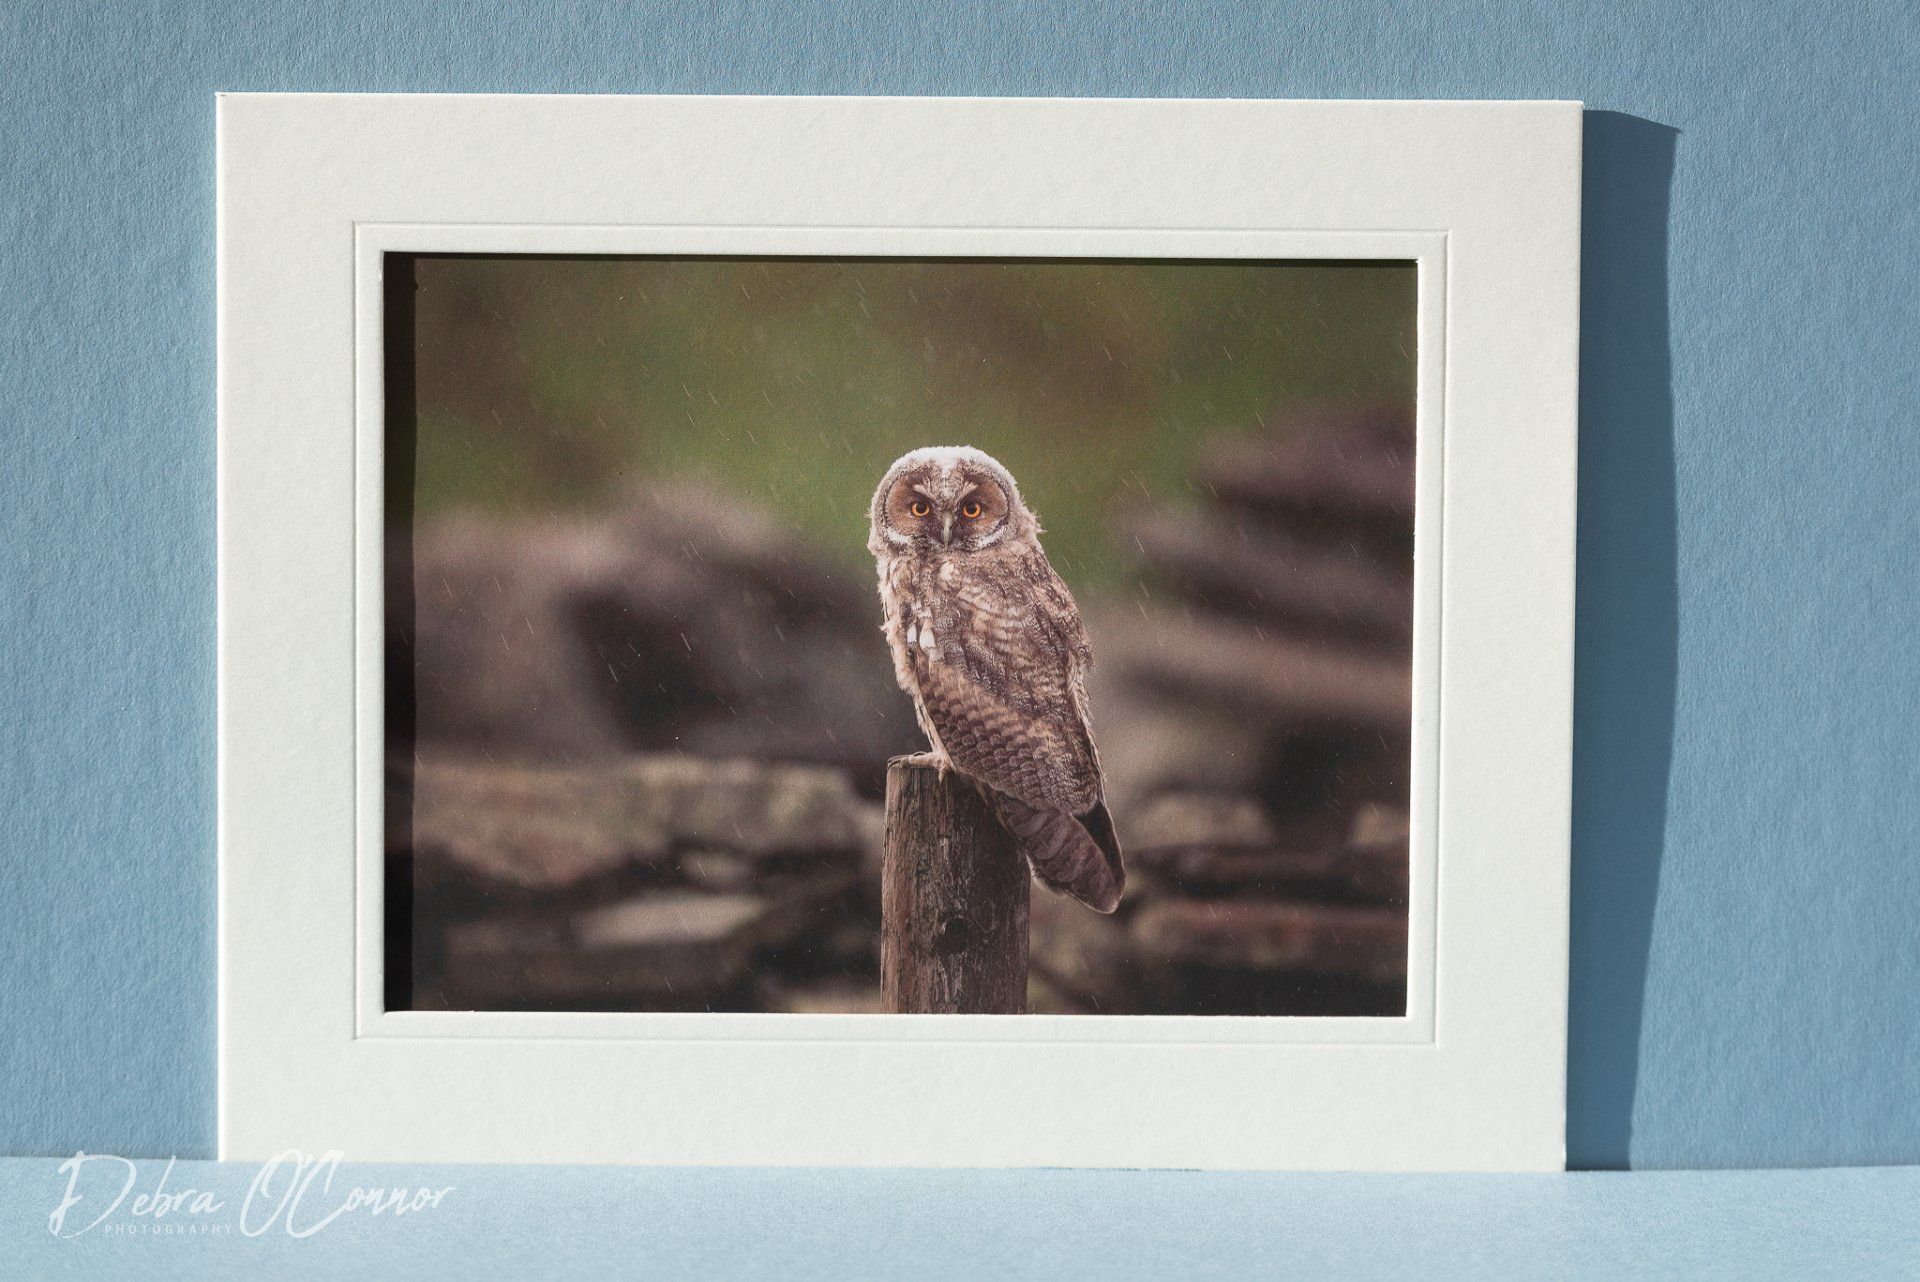 For sale, beautiful long eared owl in the rain photograph